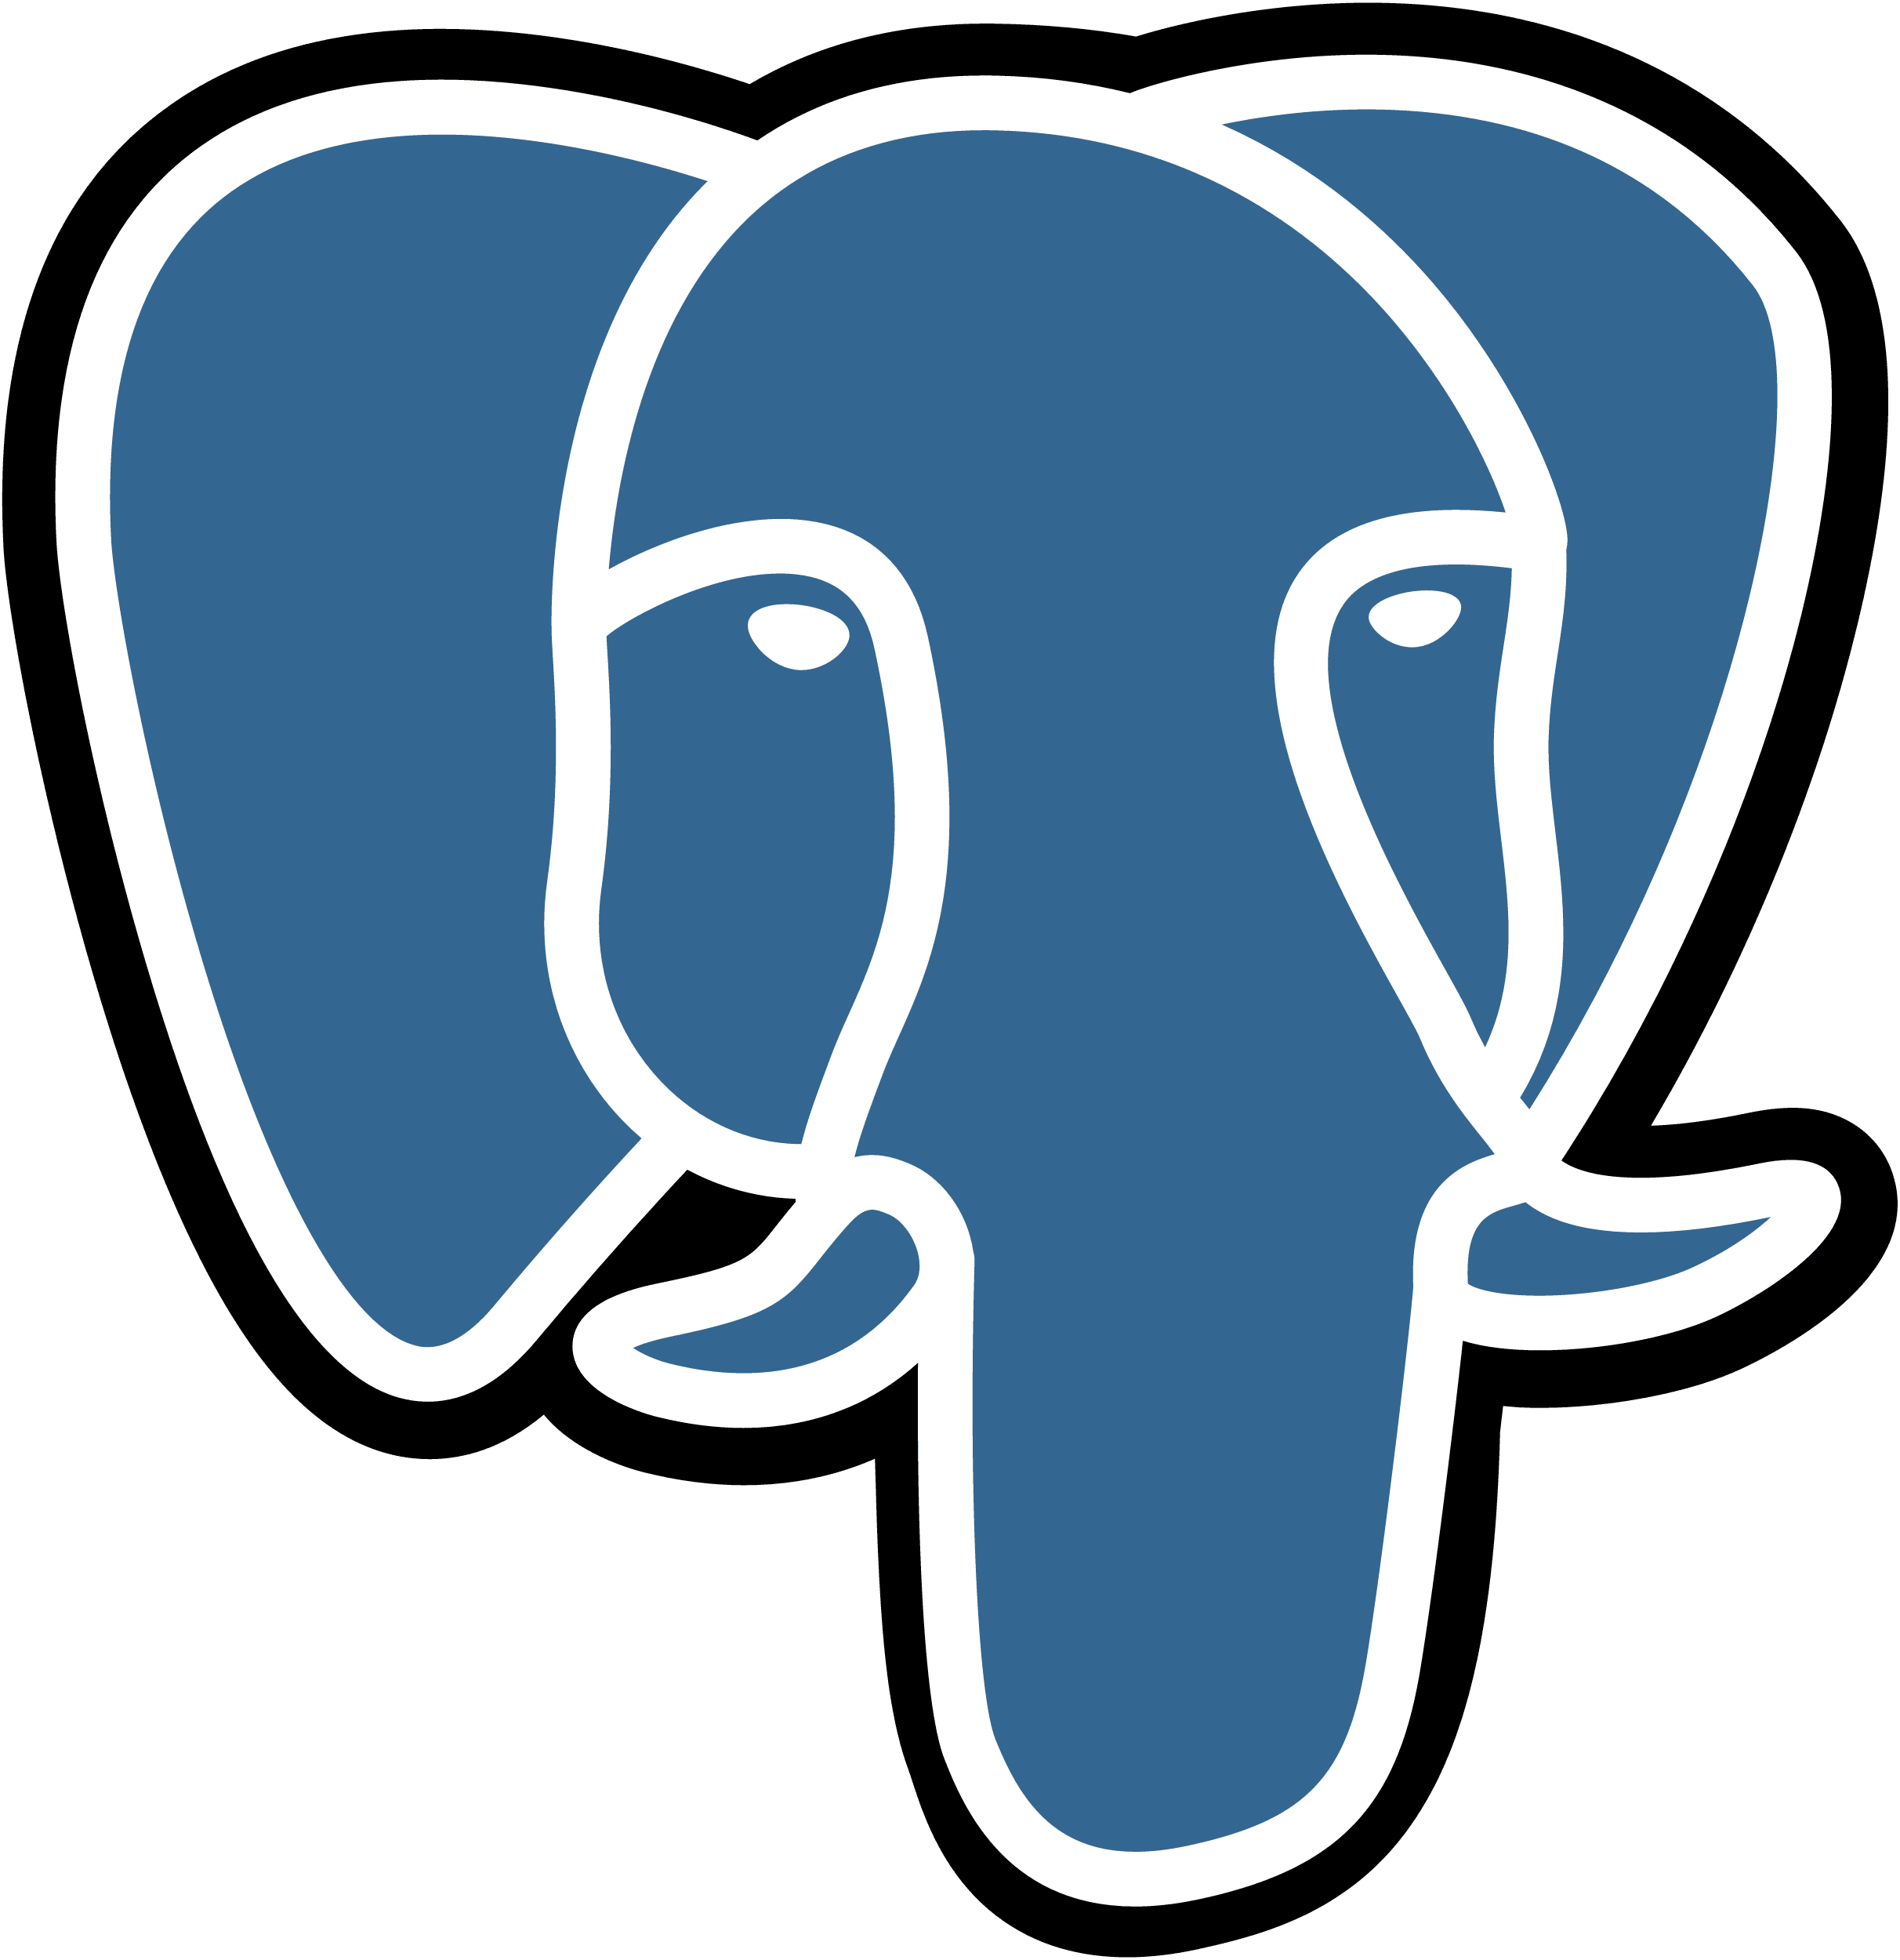 PostgreSQL - The world's most advanced open source database